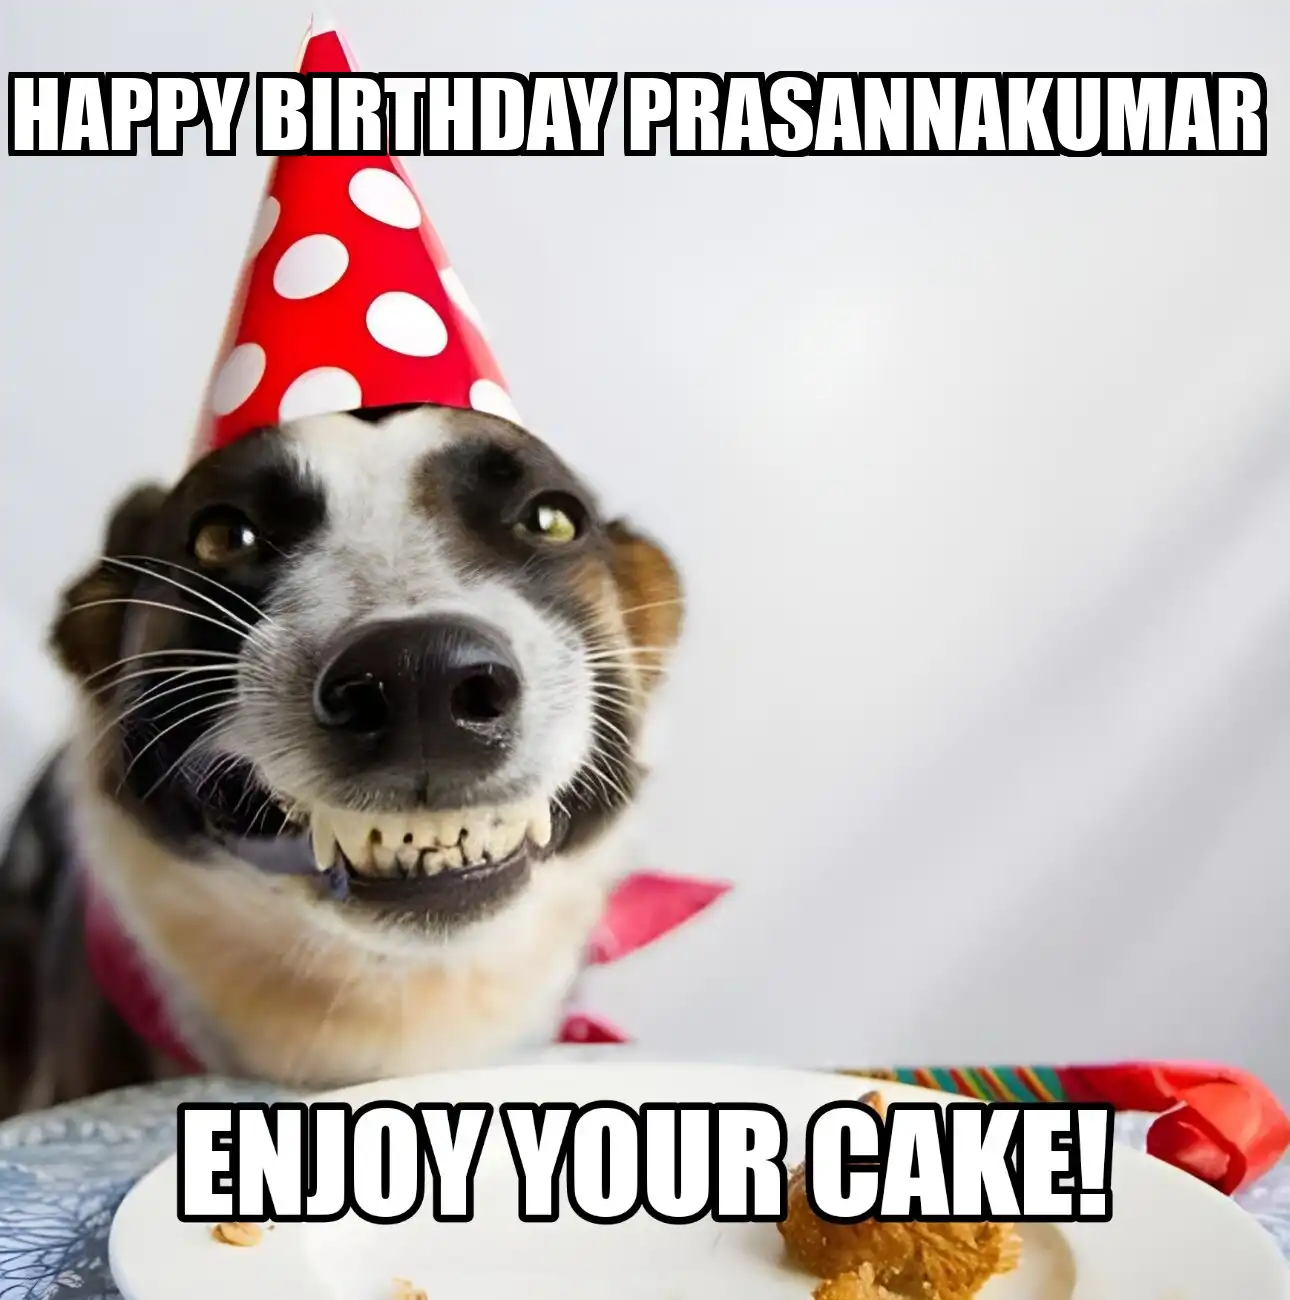 Happy Birthday Prasannakumar Enjoy Your Cake Dog Meme